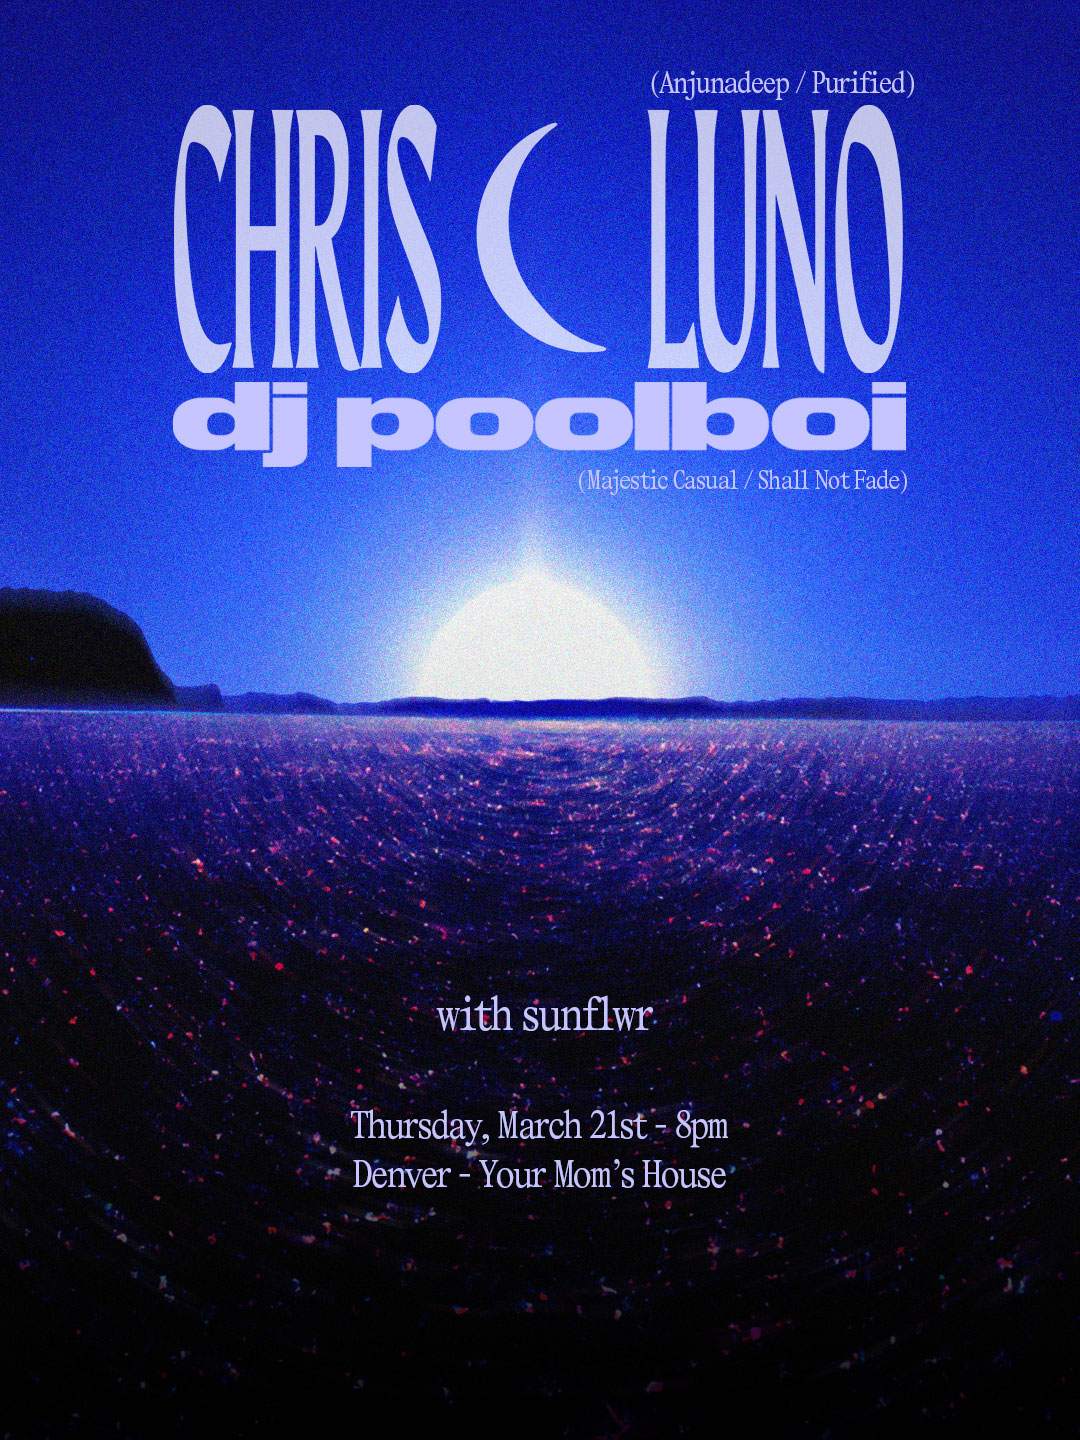 Chris Luno (Anjunadeep/Purified) dj poolboi (Majestic Casual/Shall Not Fade) & sunflwr - フライヤー裏